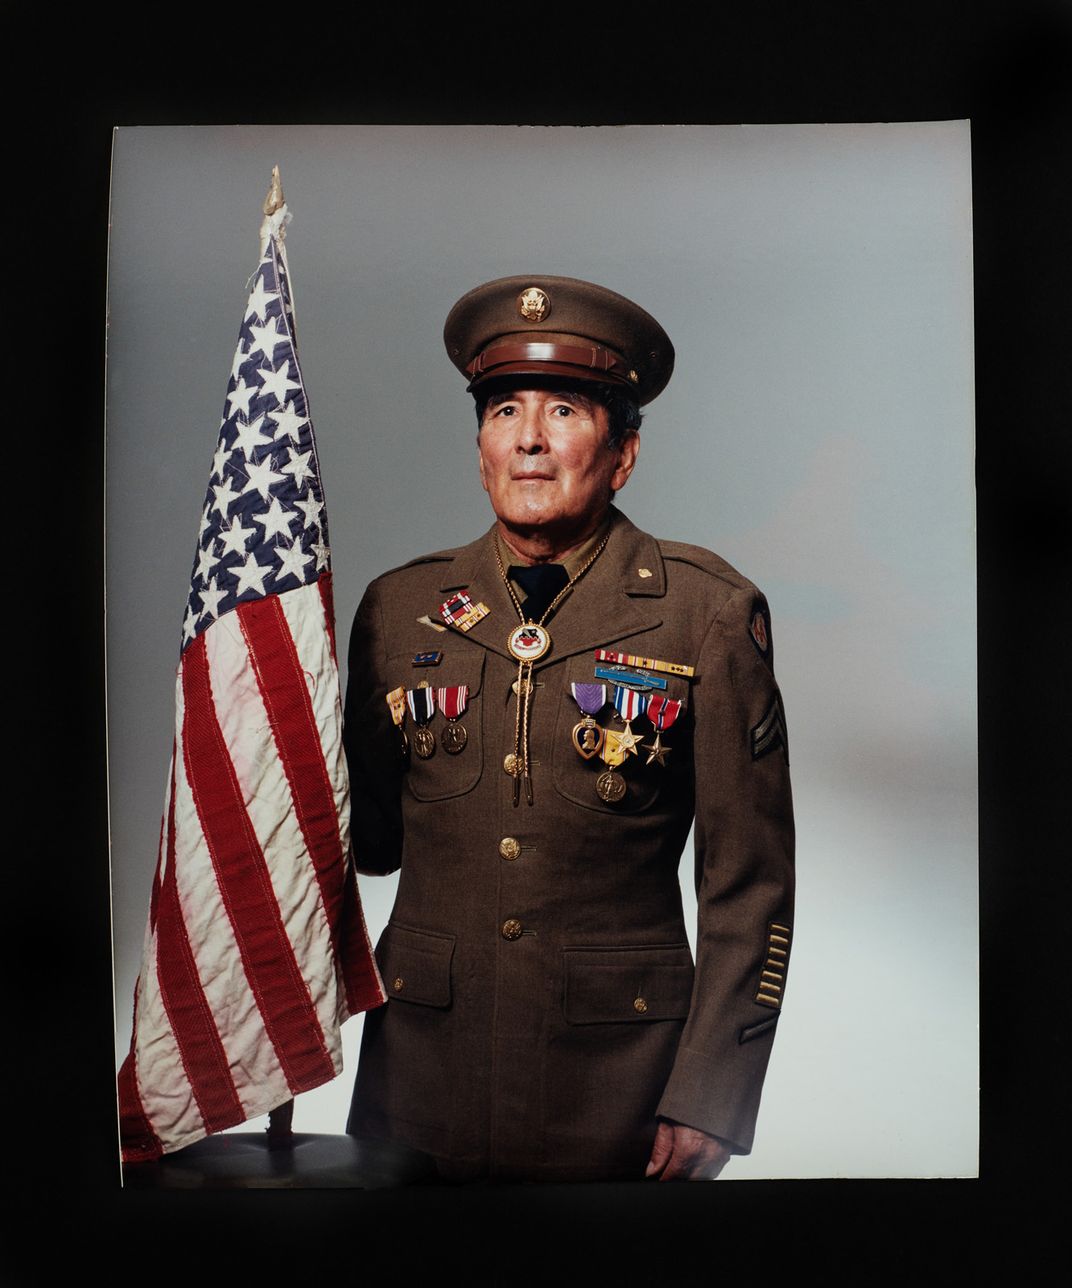 Joseph O. Quintero stands in uniform holding his handmade U.S. flag